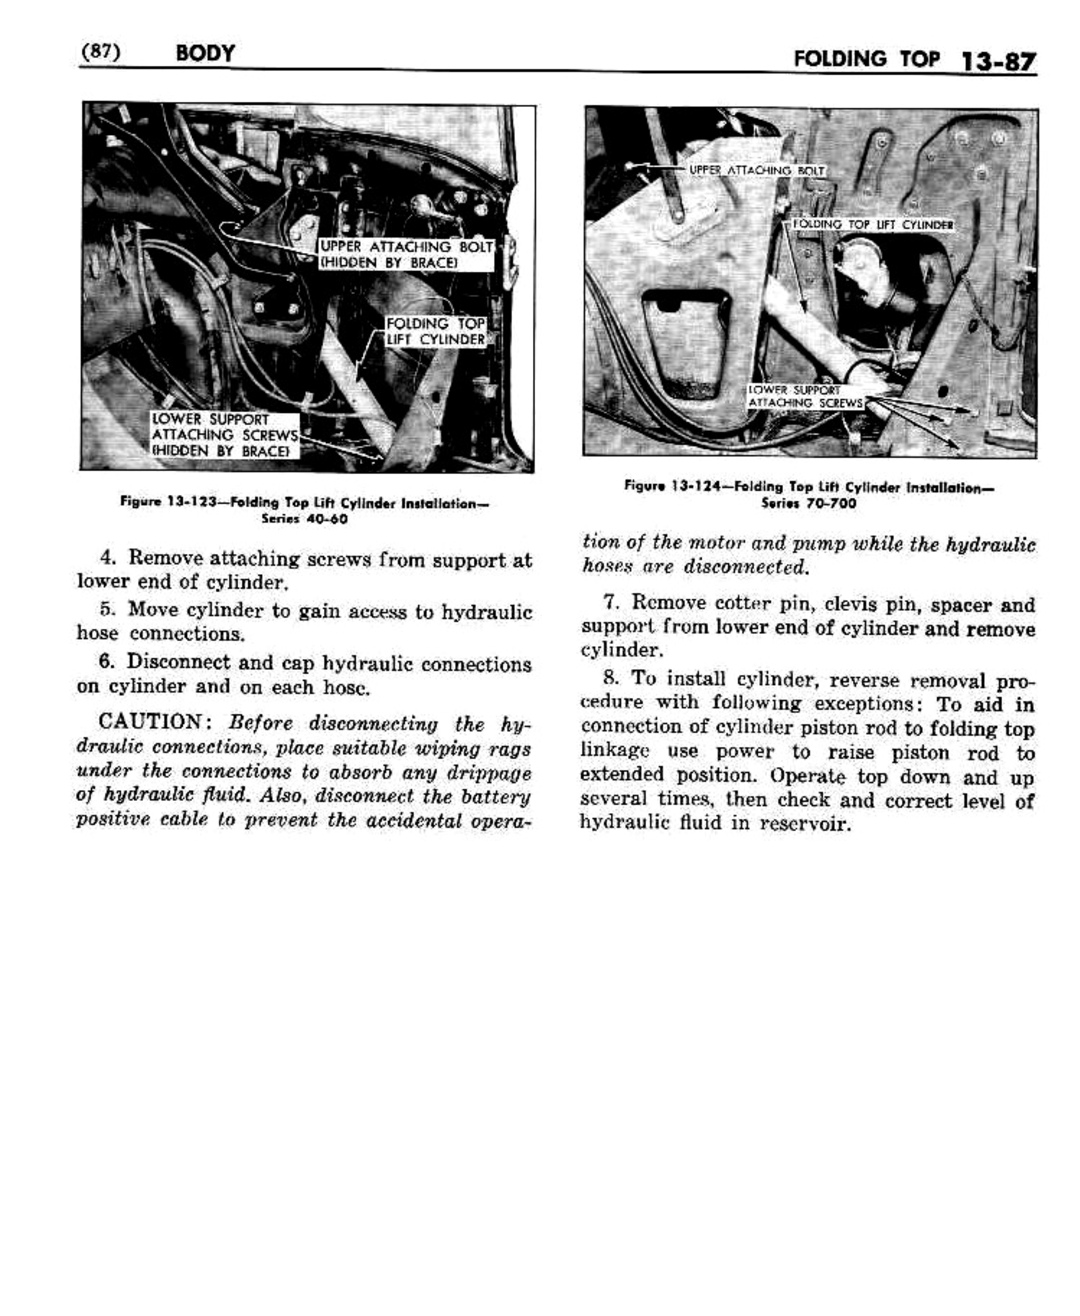 n_1958 Buick Body Service Manual-088-088.jpg